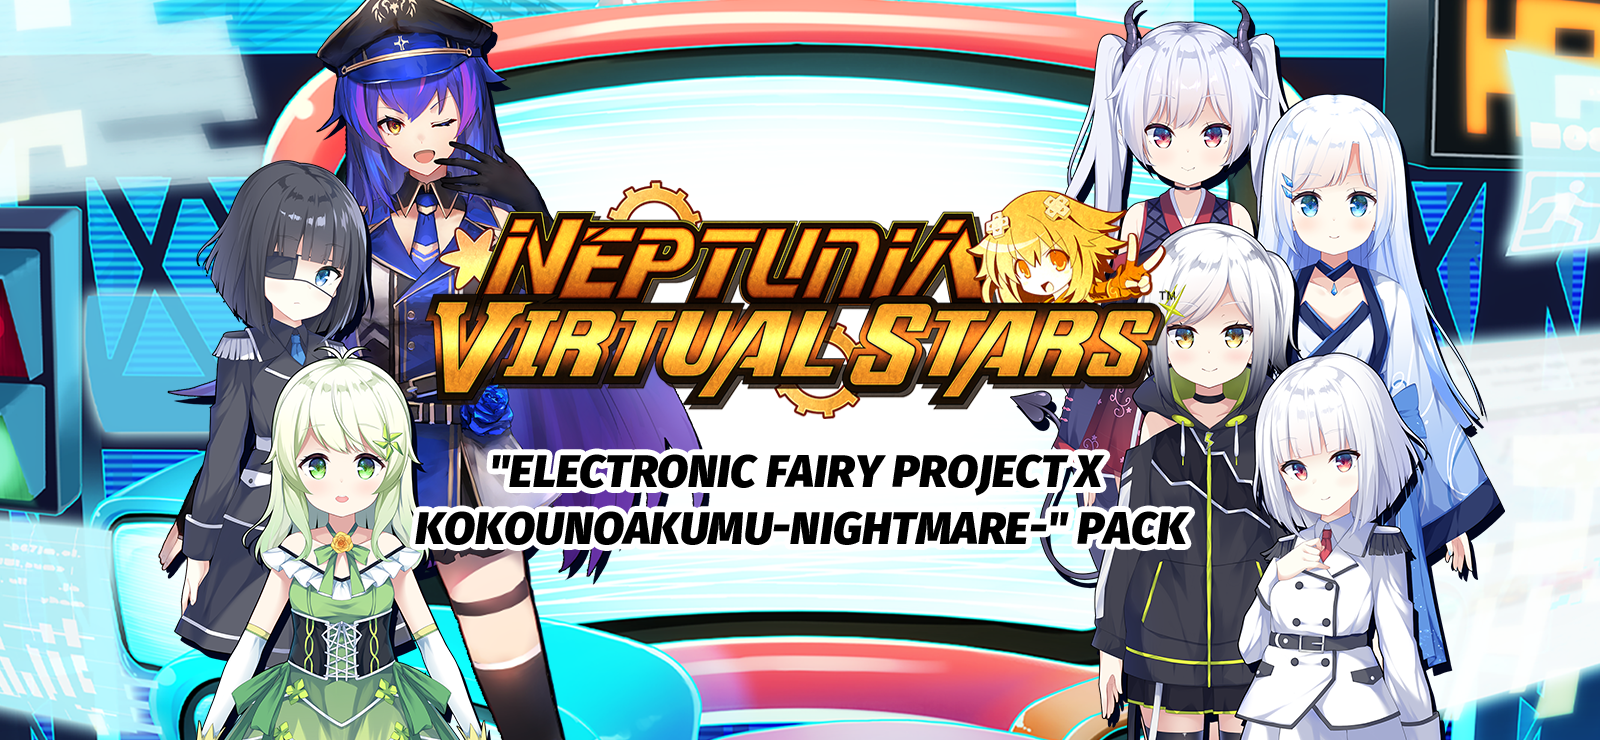 Neptunia Virtual Stars - Electronic Fairy Project X Kokounoakumu-Nightmare- Pack